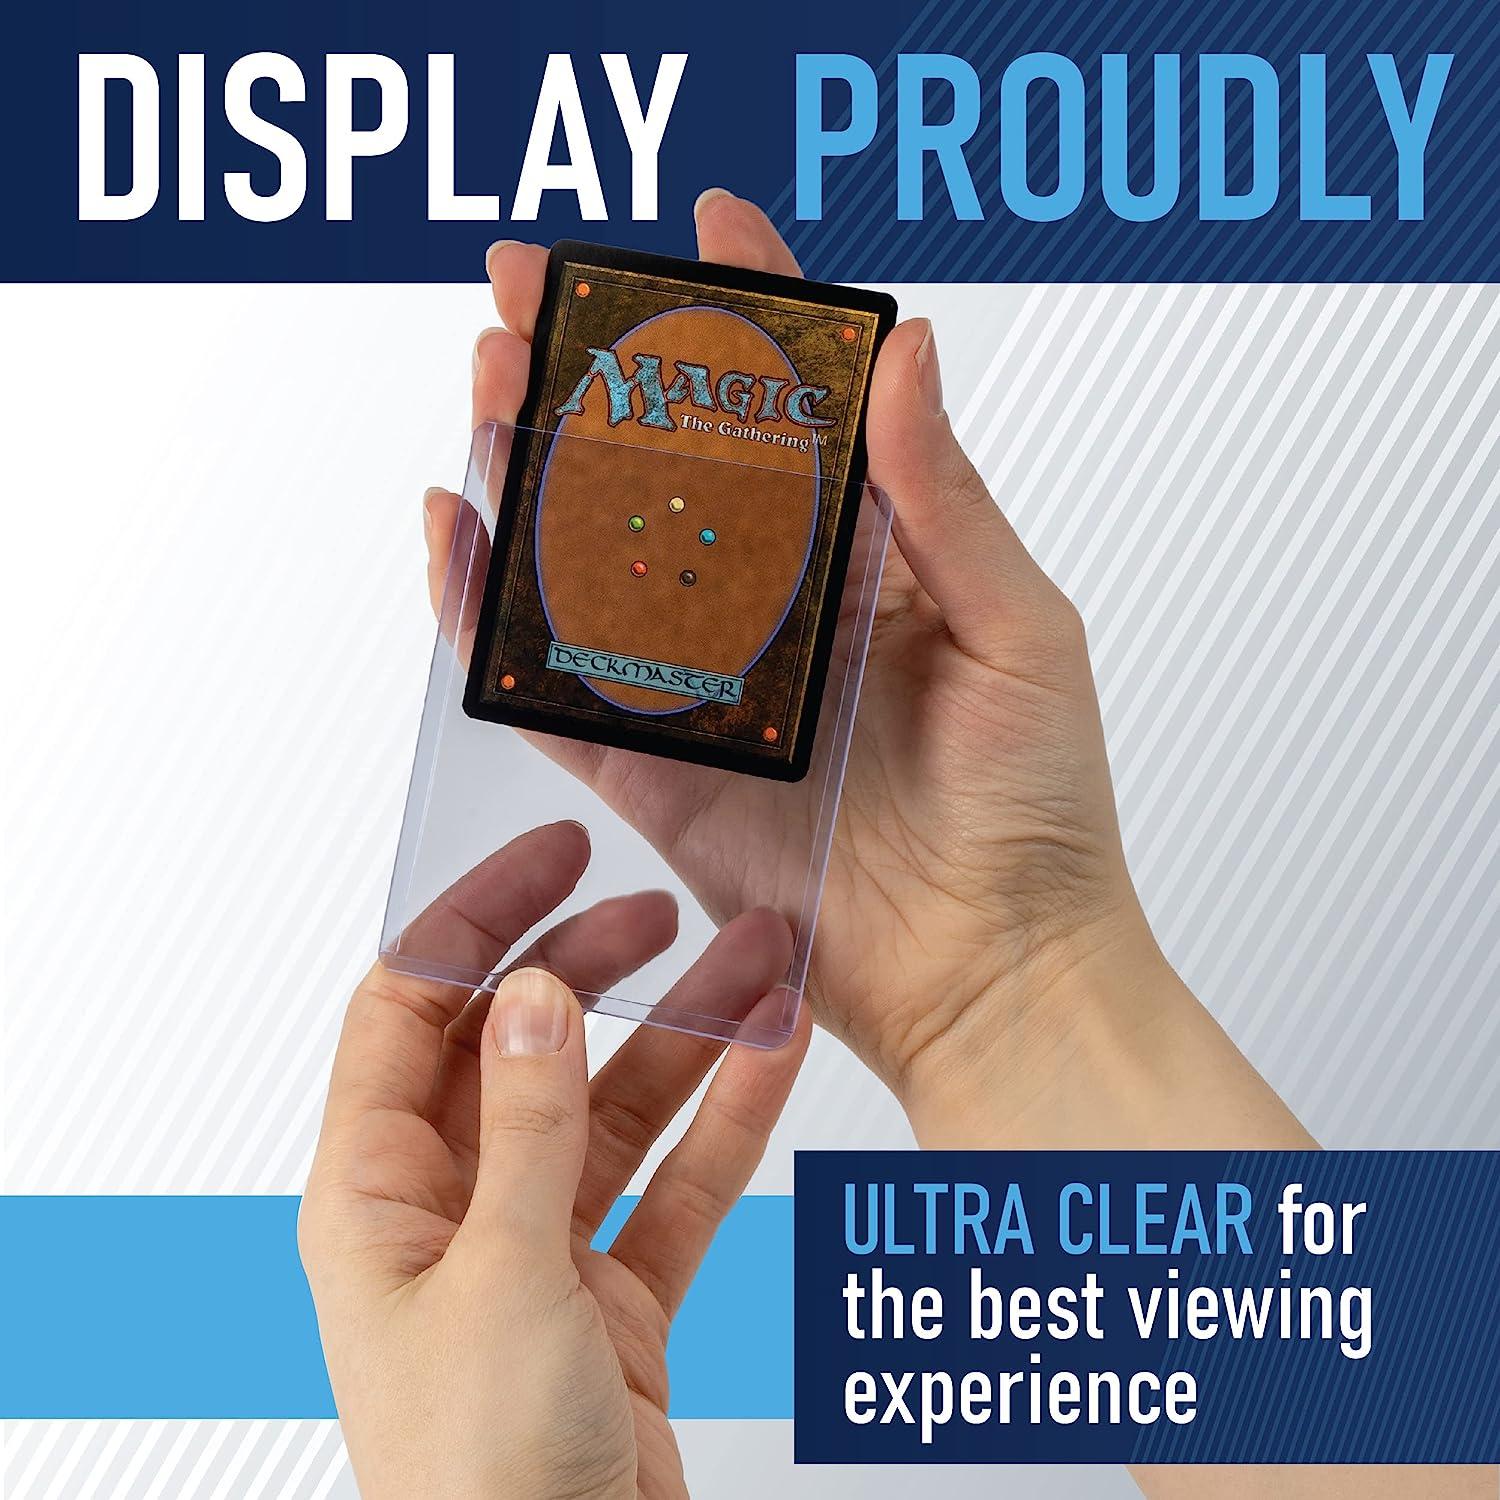 25 x Ultra Pro 35pt TopLoader + 100 Card Sleeves TopLoaders Top